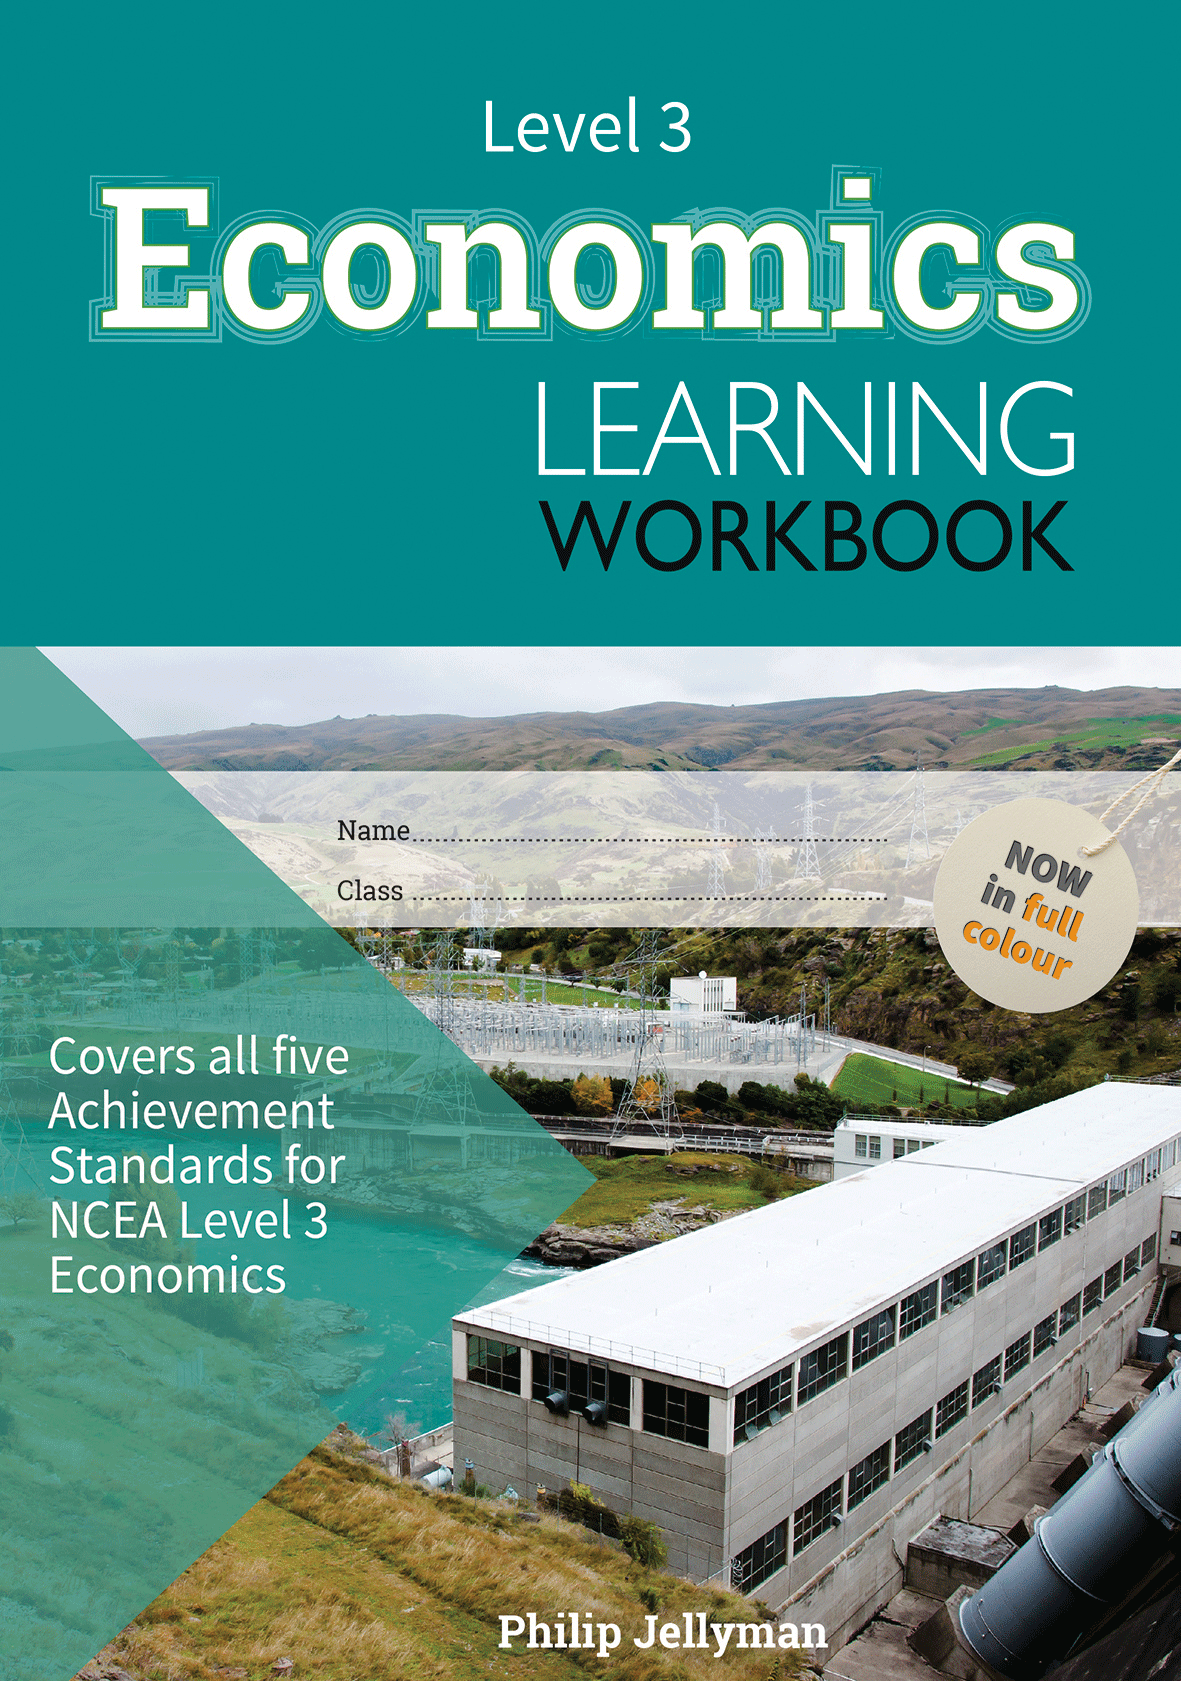 Level 3 Economics Learning Workbook